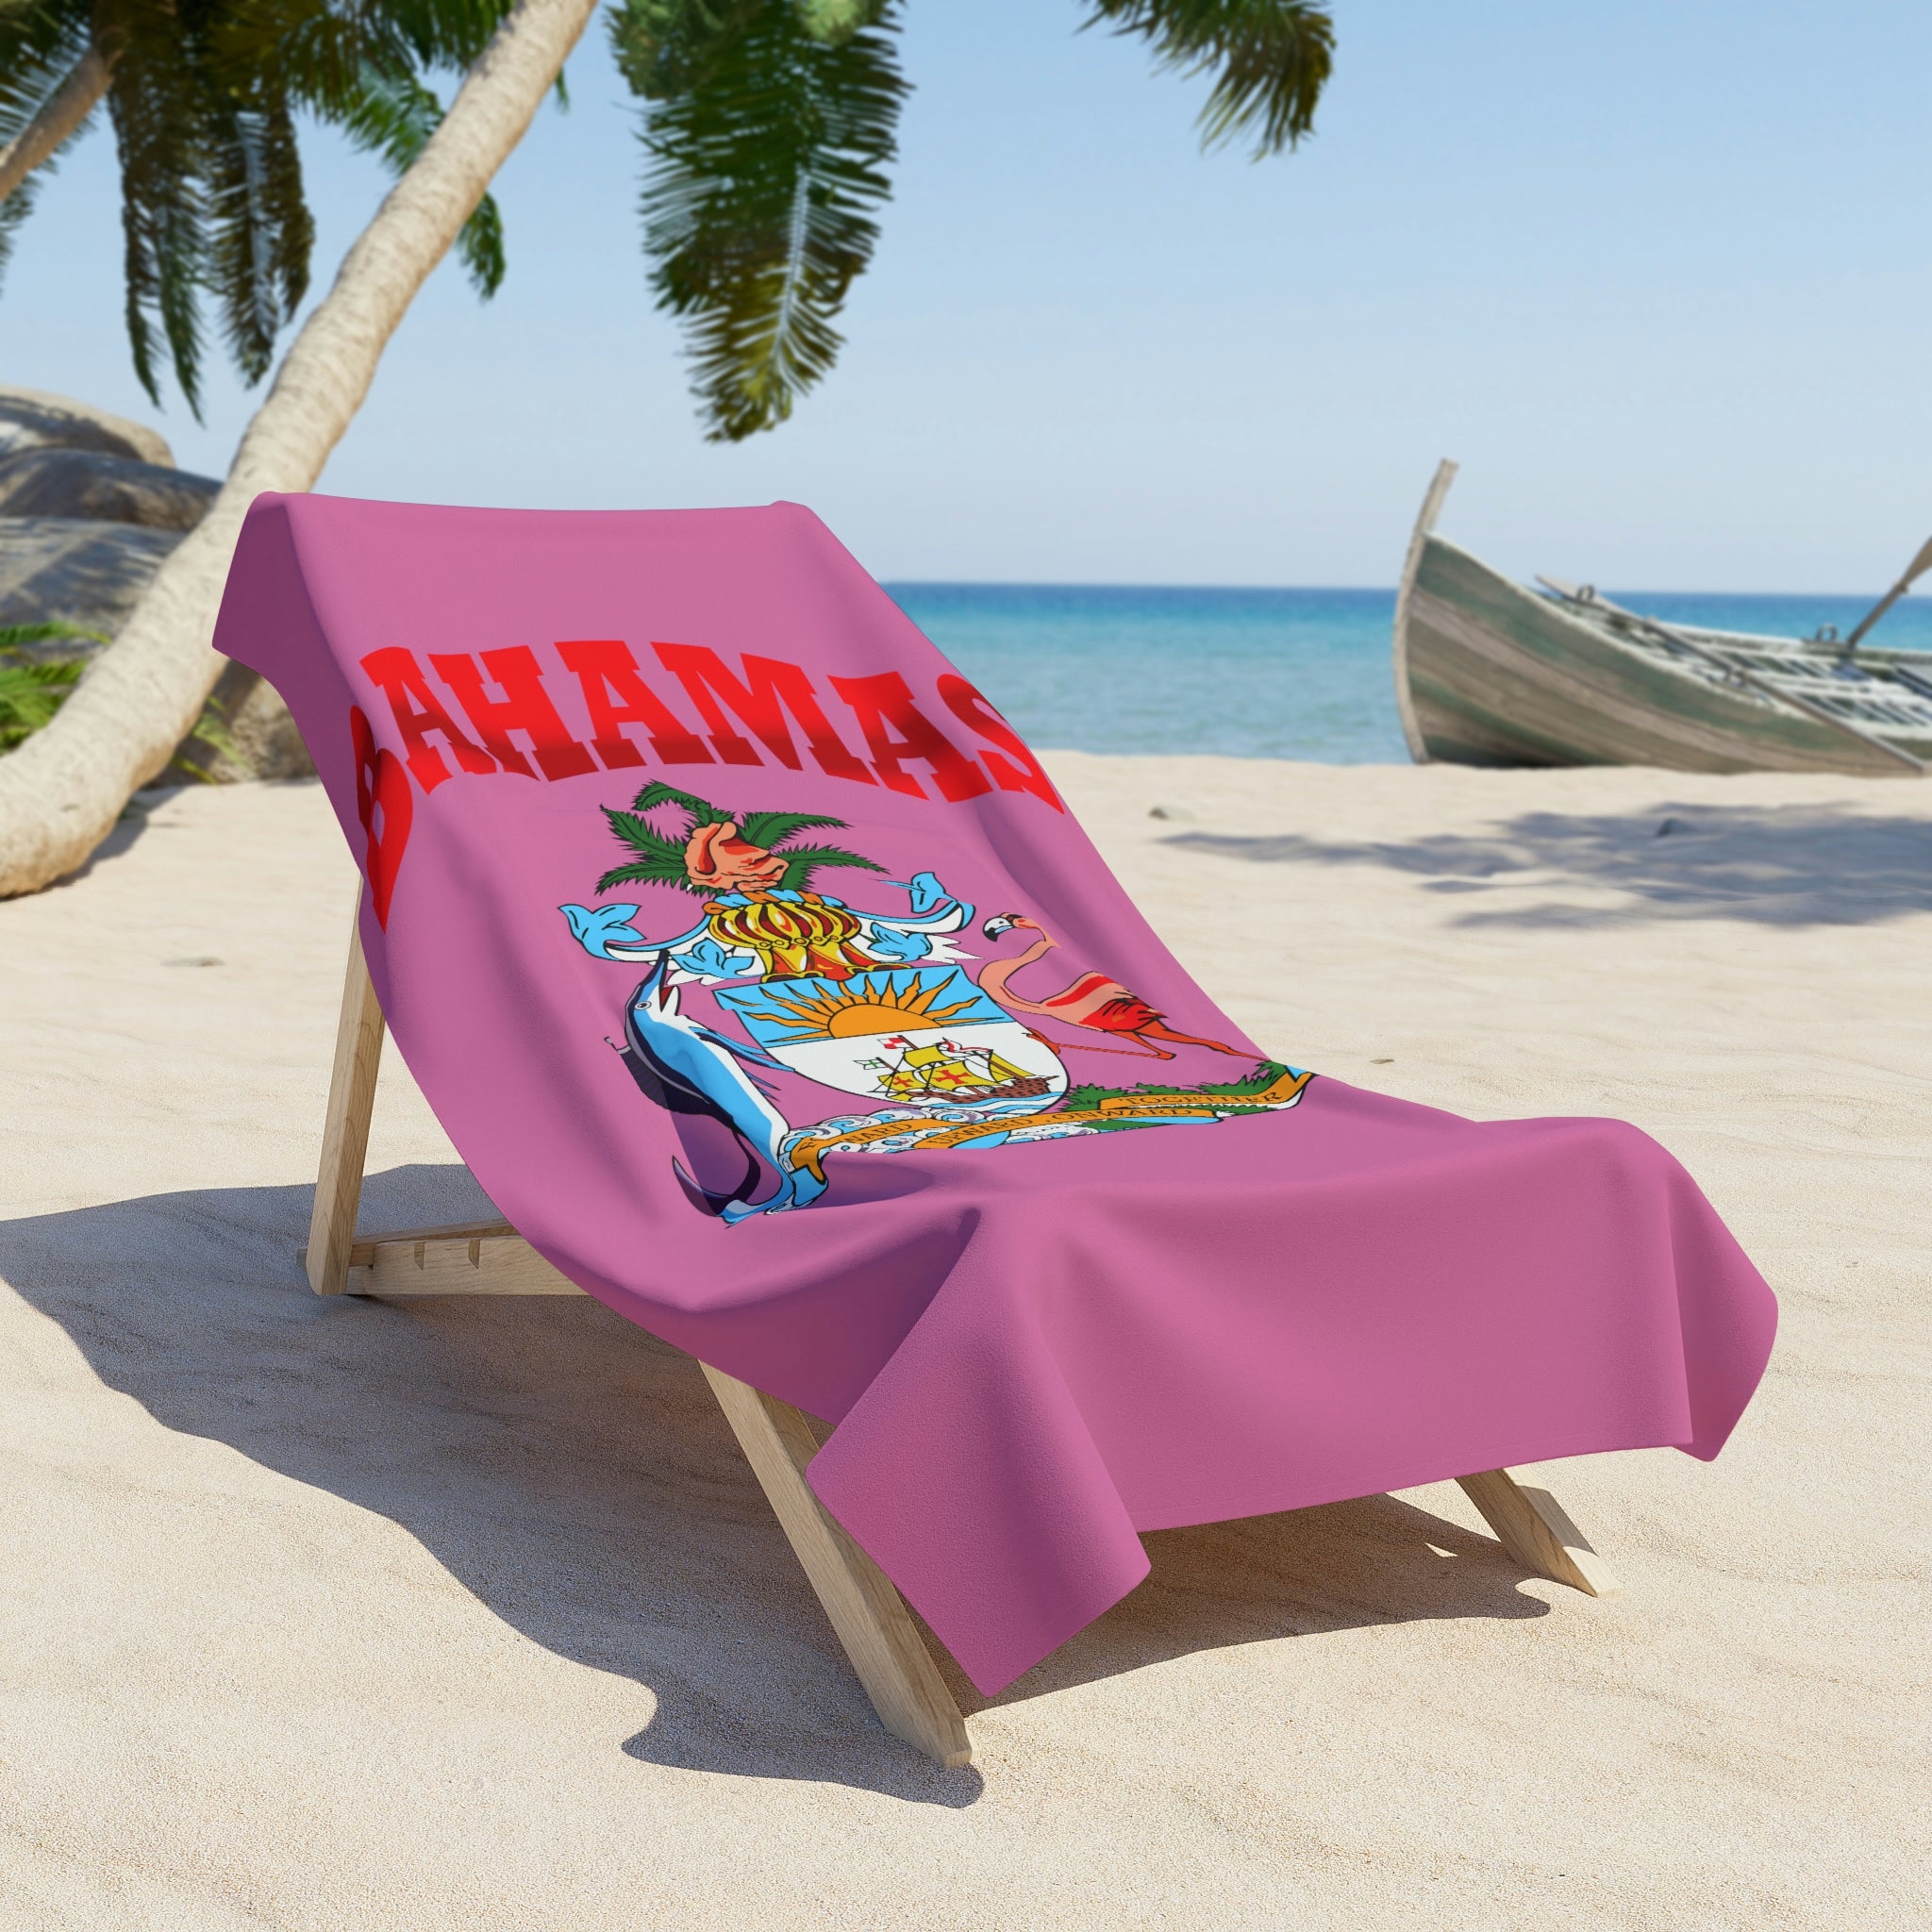 Bahamas Beach Towel, Personalized Beach Towel, Bahamas Beach towel, Custom Beach Towel, Beach Towels, name towel